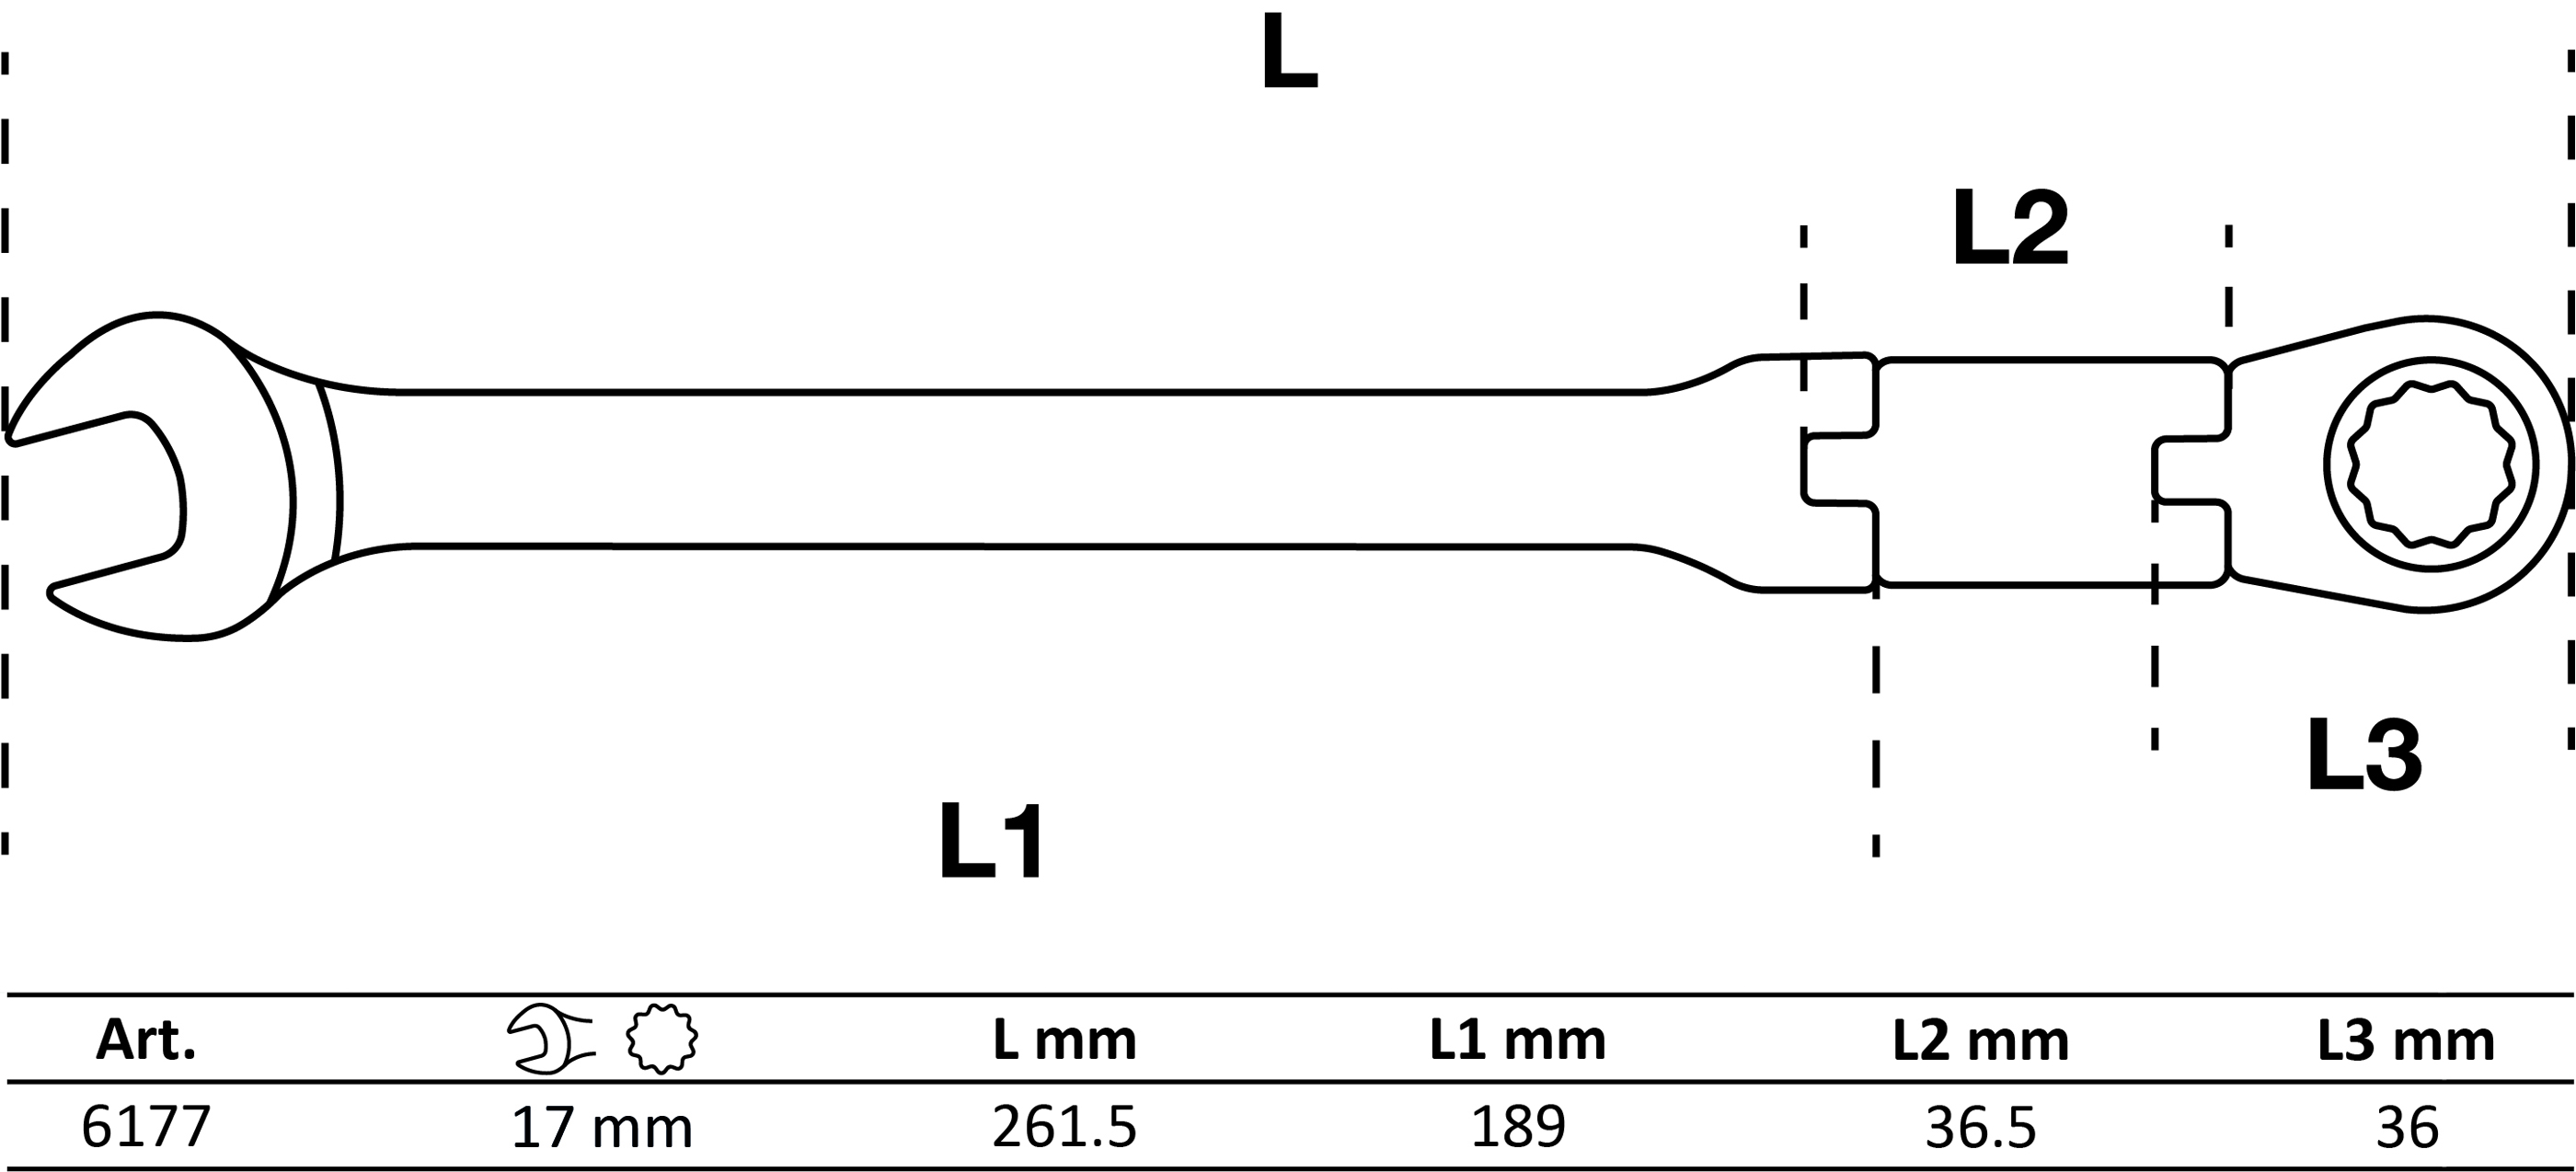 BGS Doppelgelenk-Ratschenring-Maulschlüssel | abwinkelbar | SW 17 mm